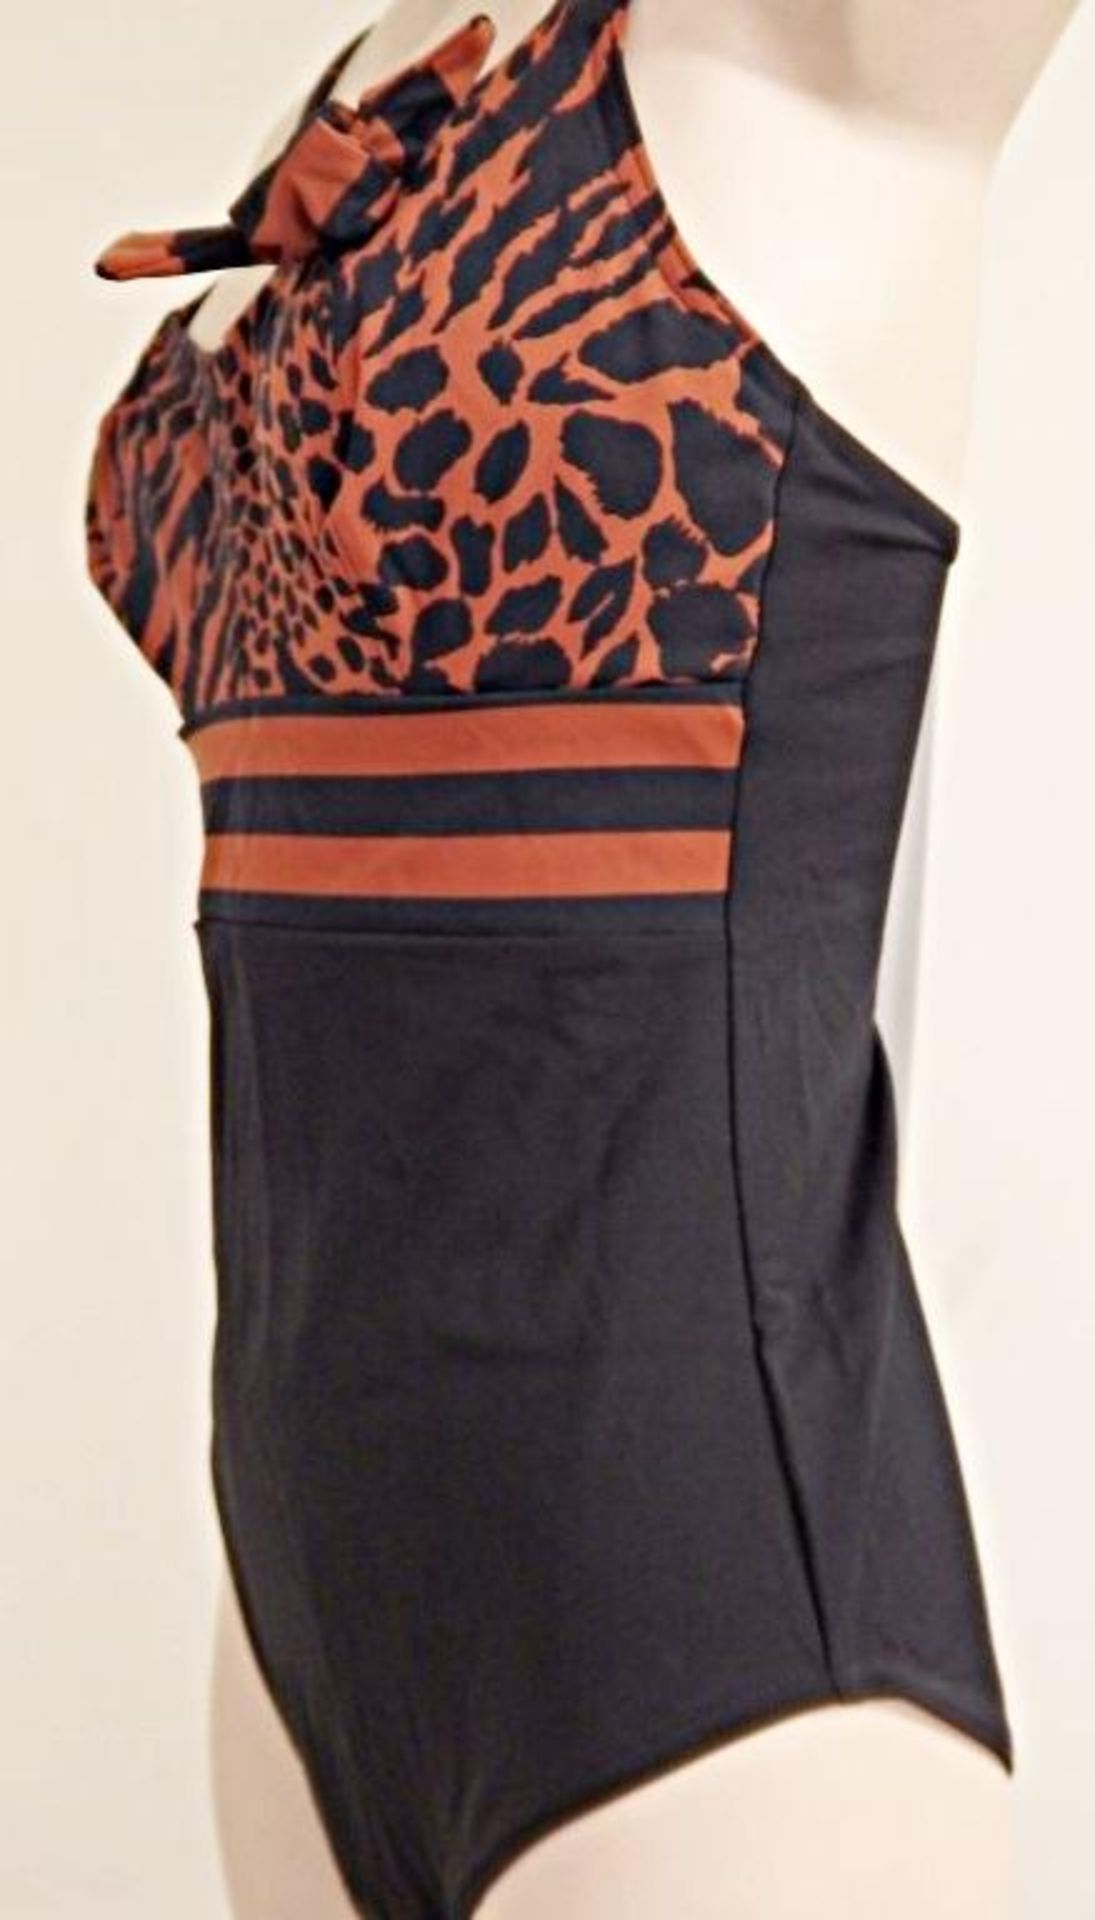 1 x Rasurel - Black/Tan Leopard and Stripe - Bahia Swimsuit - R21235 - Size 2C - UK 32 - Fr 85 - EU - Image 2 of 7